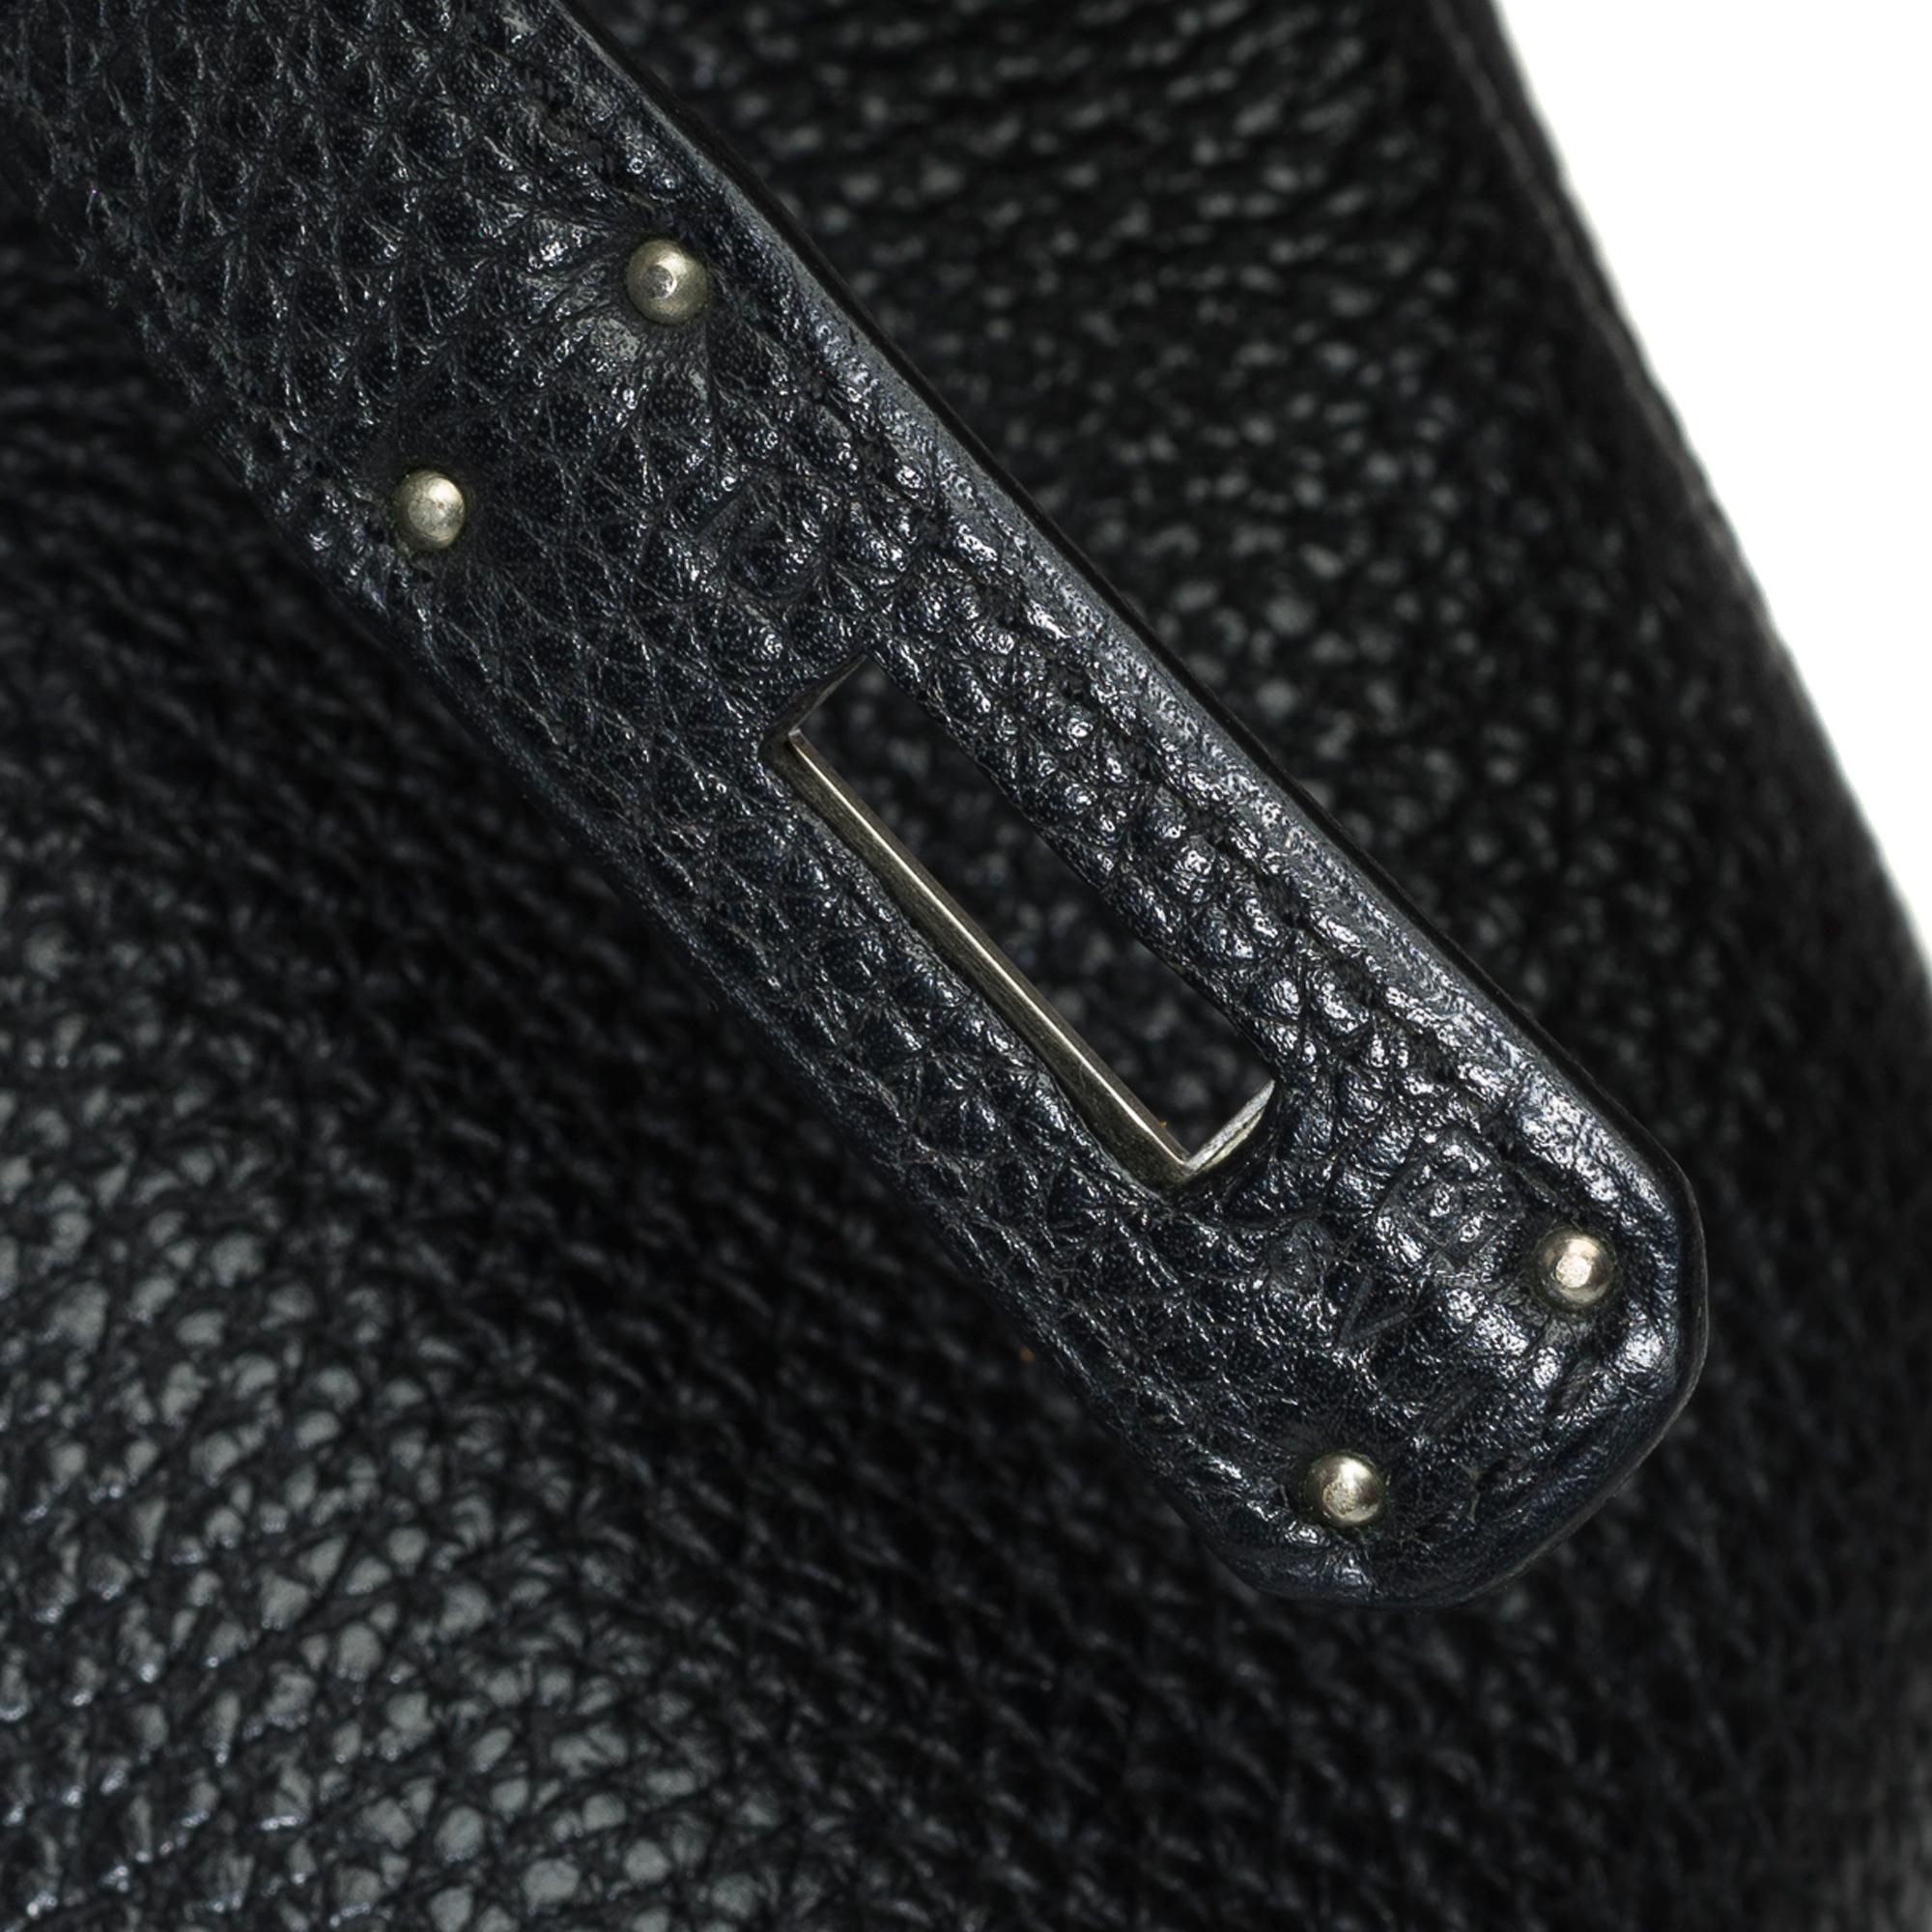 Very Classy Hermes Birkin 40 handbag in Black Togo Calf leather, SHW 3